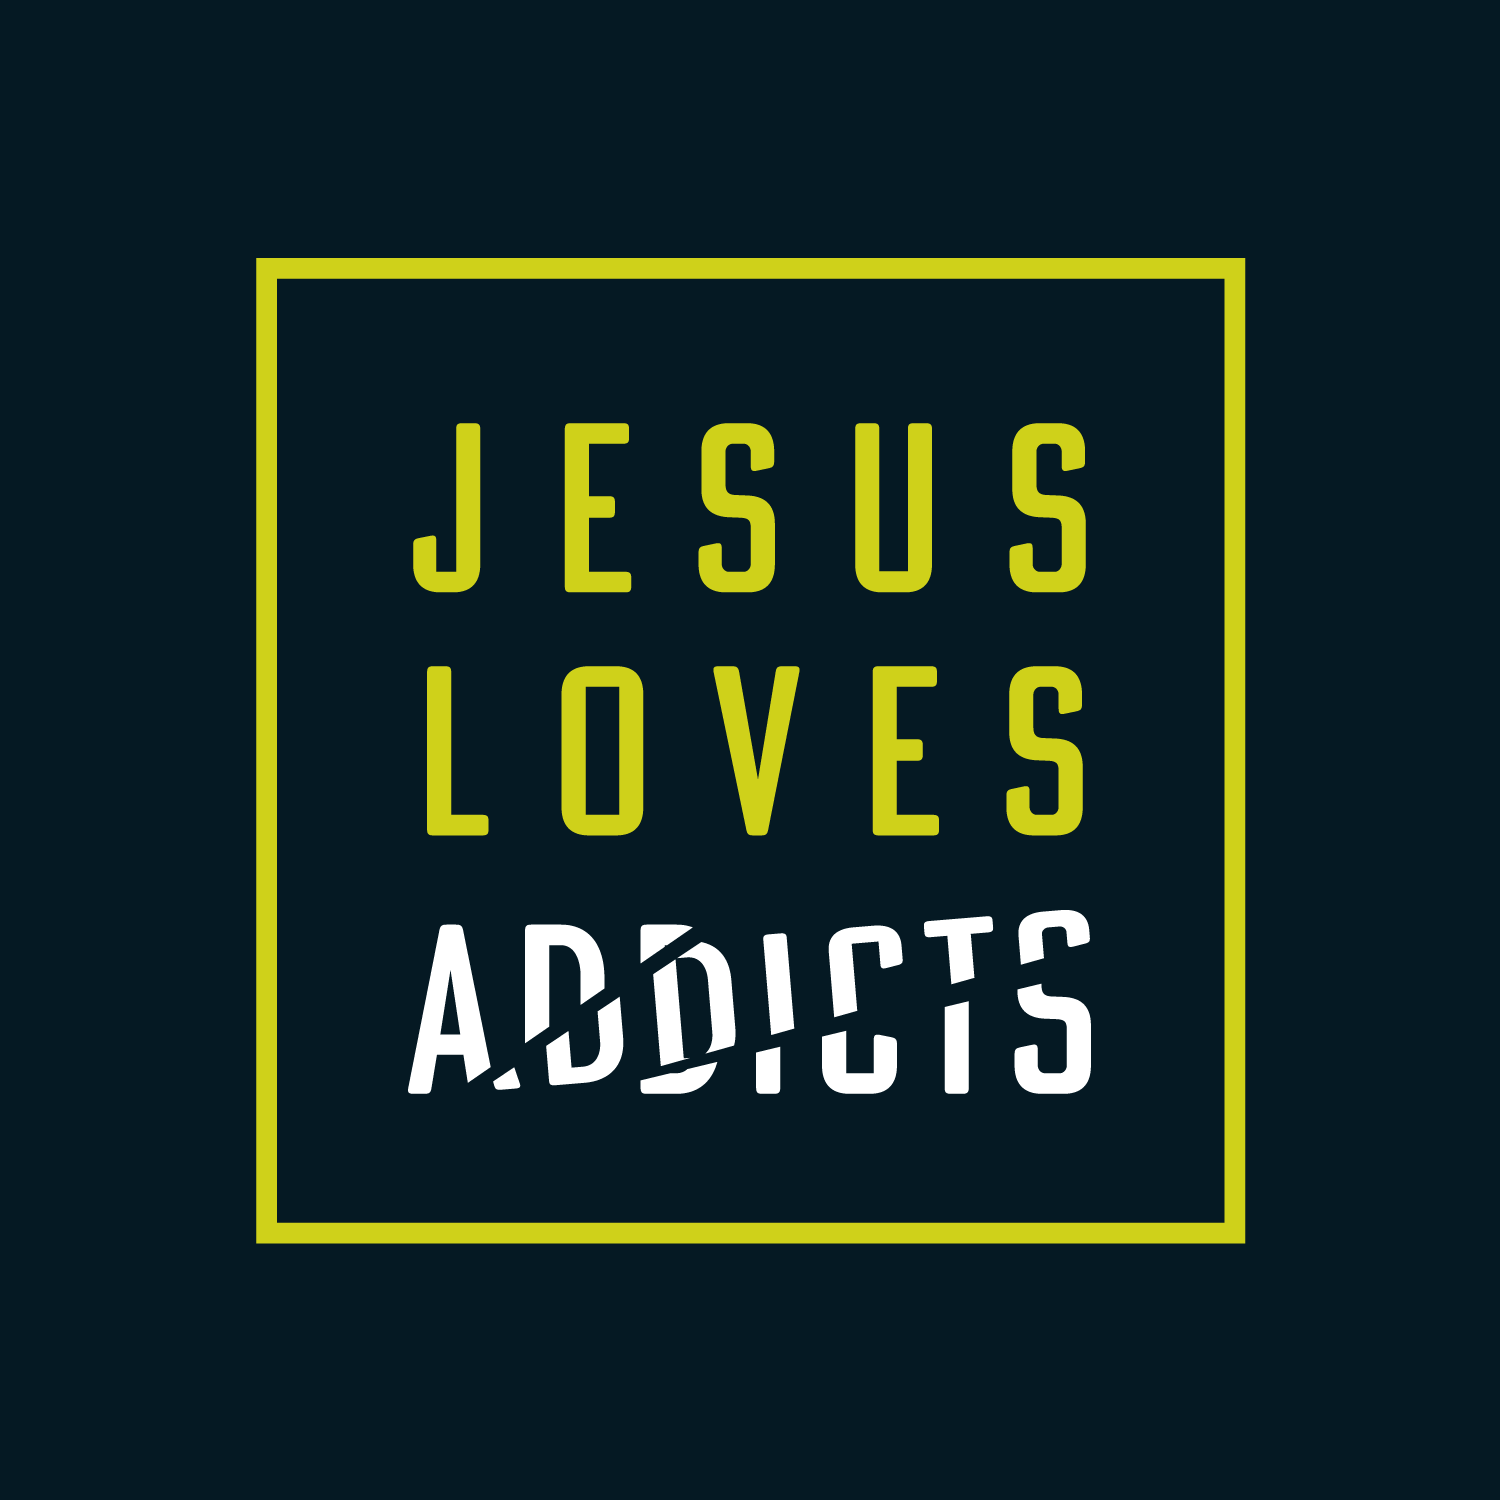 Jesus Loves Addicts